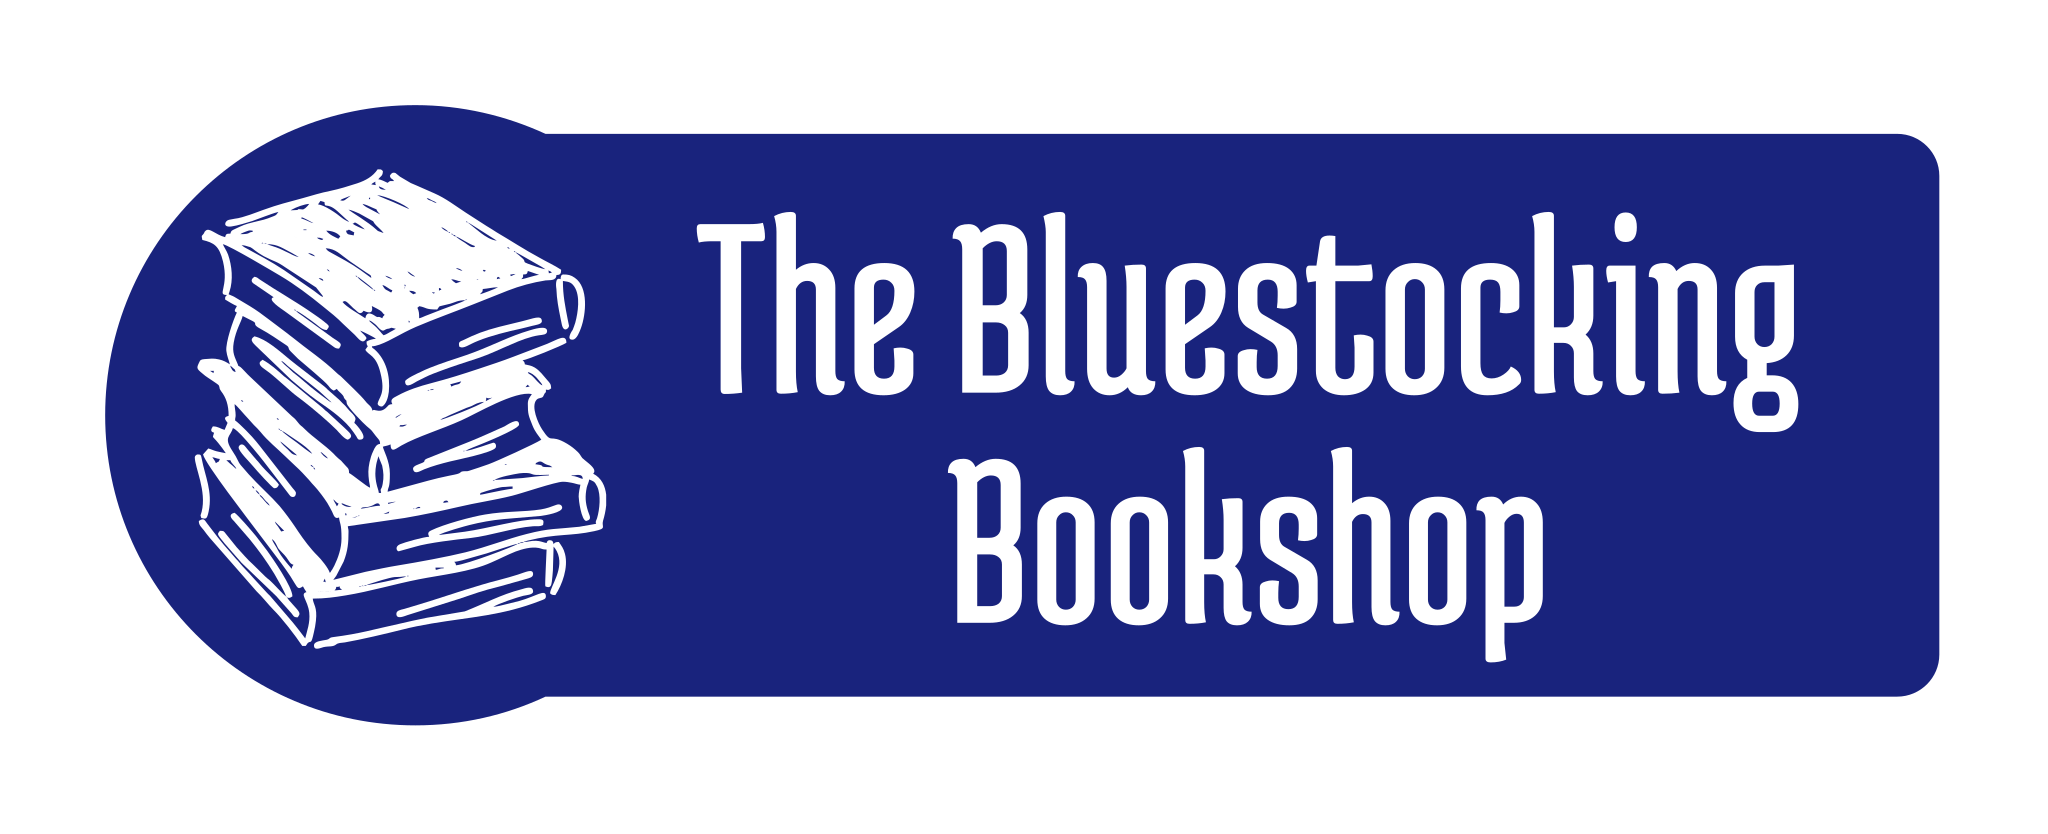 The Bluestocking Bookshop